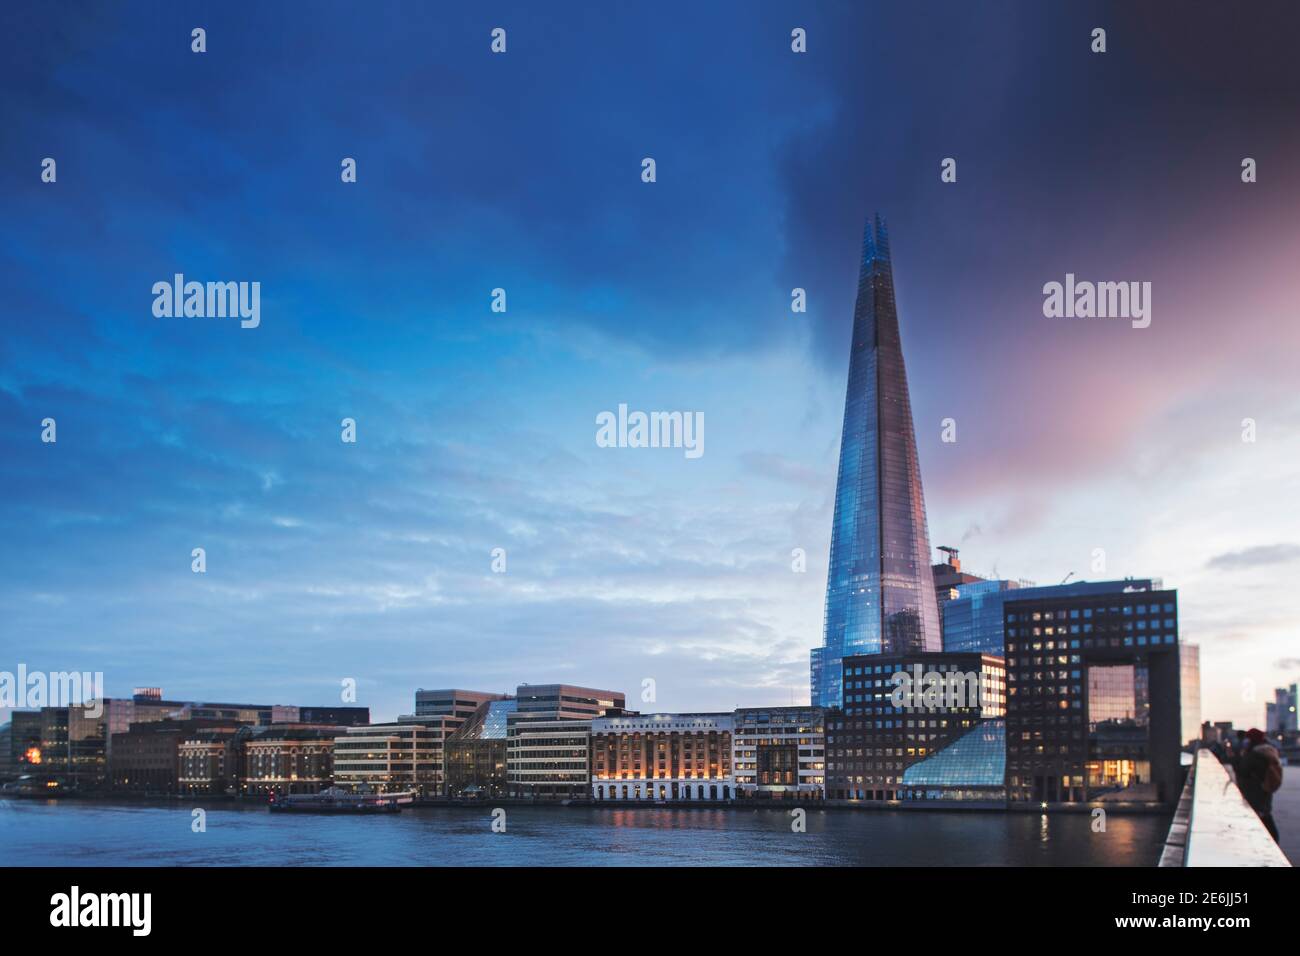 The London skyline from London Bridge, looking south over the river Thames to Southwark & Bermondsey, Shard skyscraper, London Bridge Hospital, dusk Stock Photo